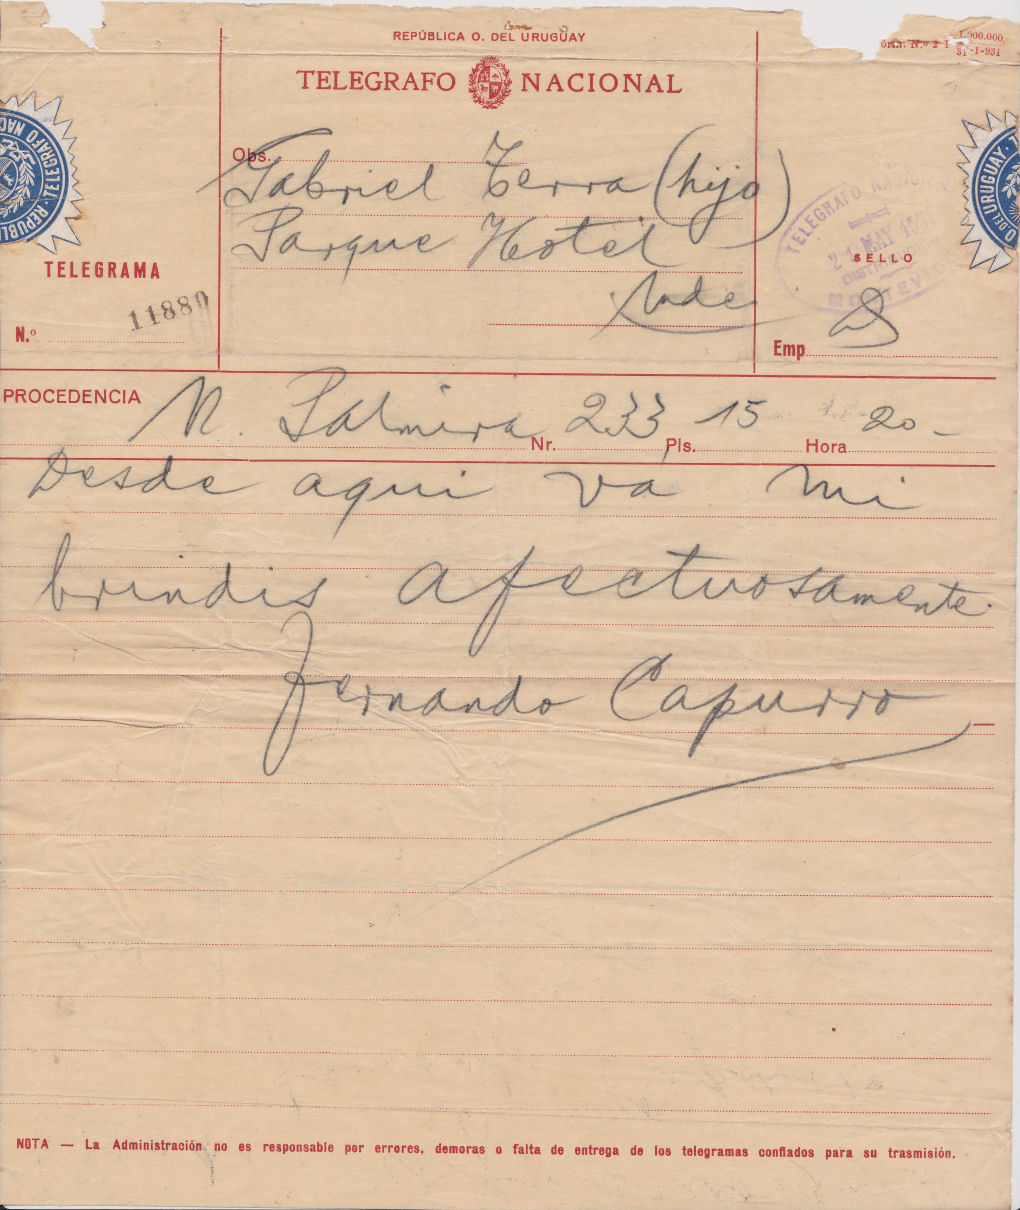 Telegram of 21-5-1931